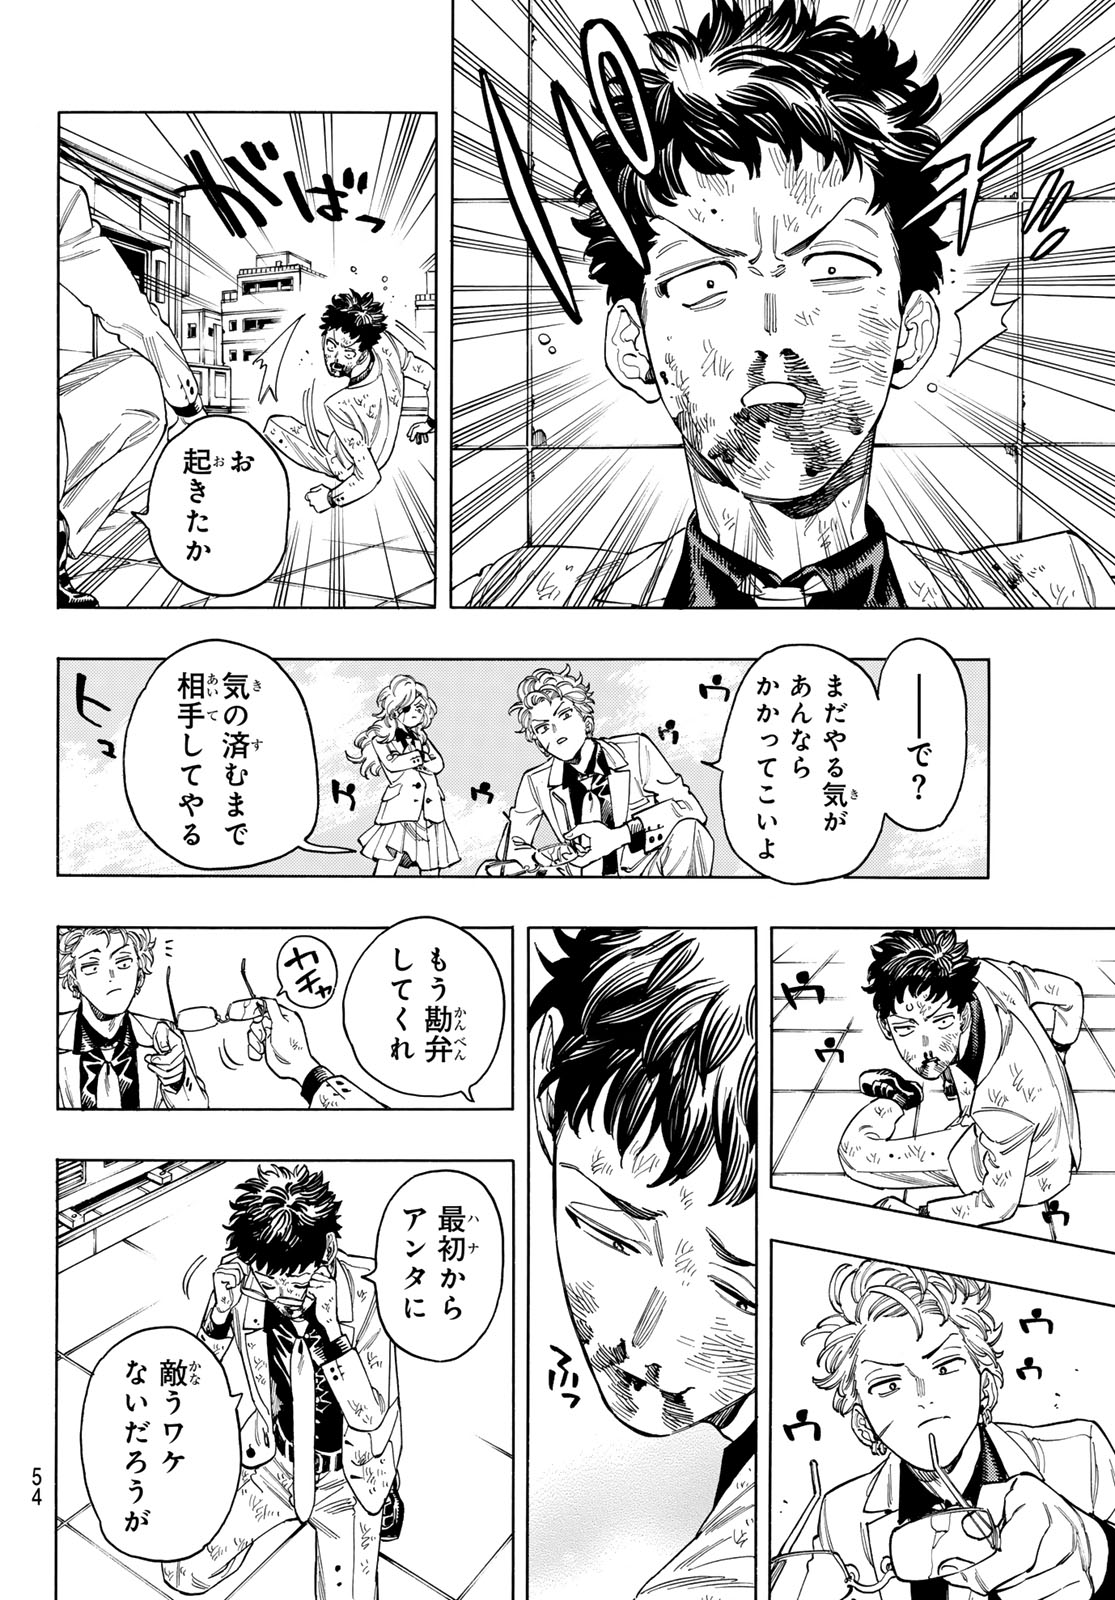 Akabane Honeko no Bodyguard - Chapter 79 - Page 8